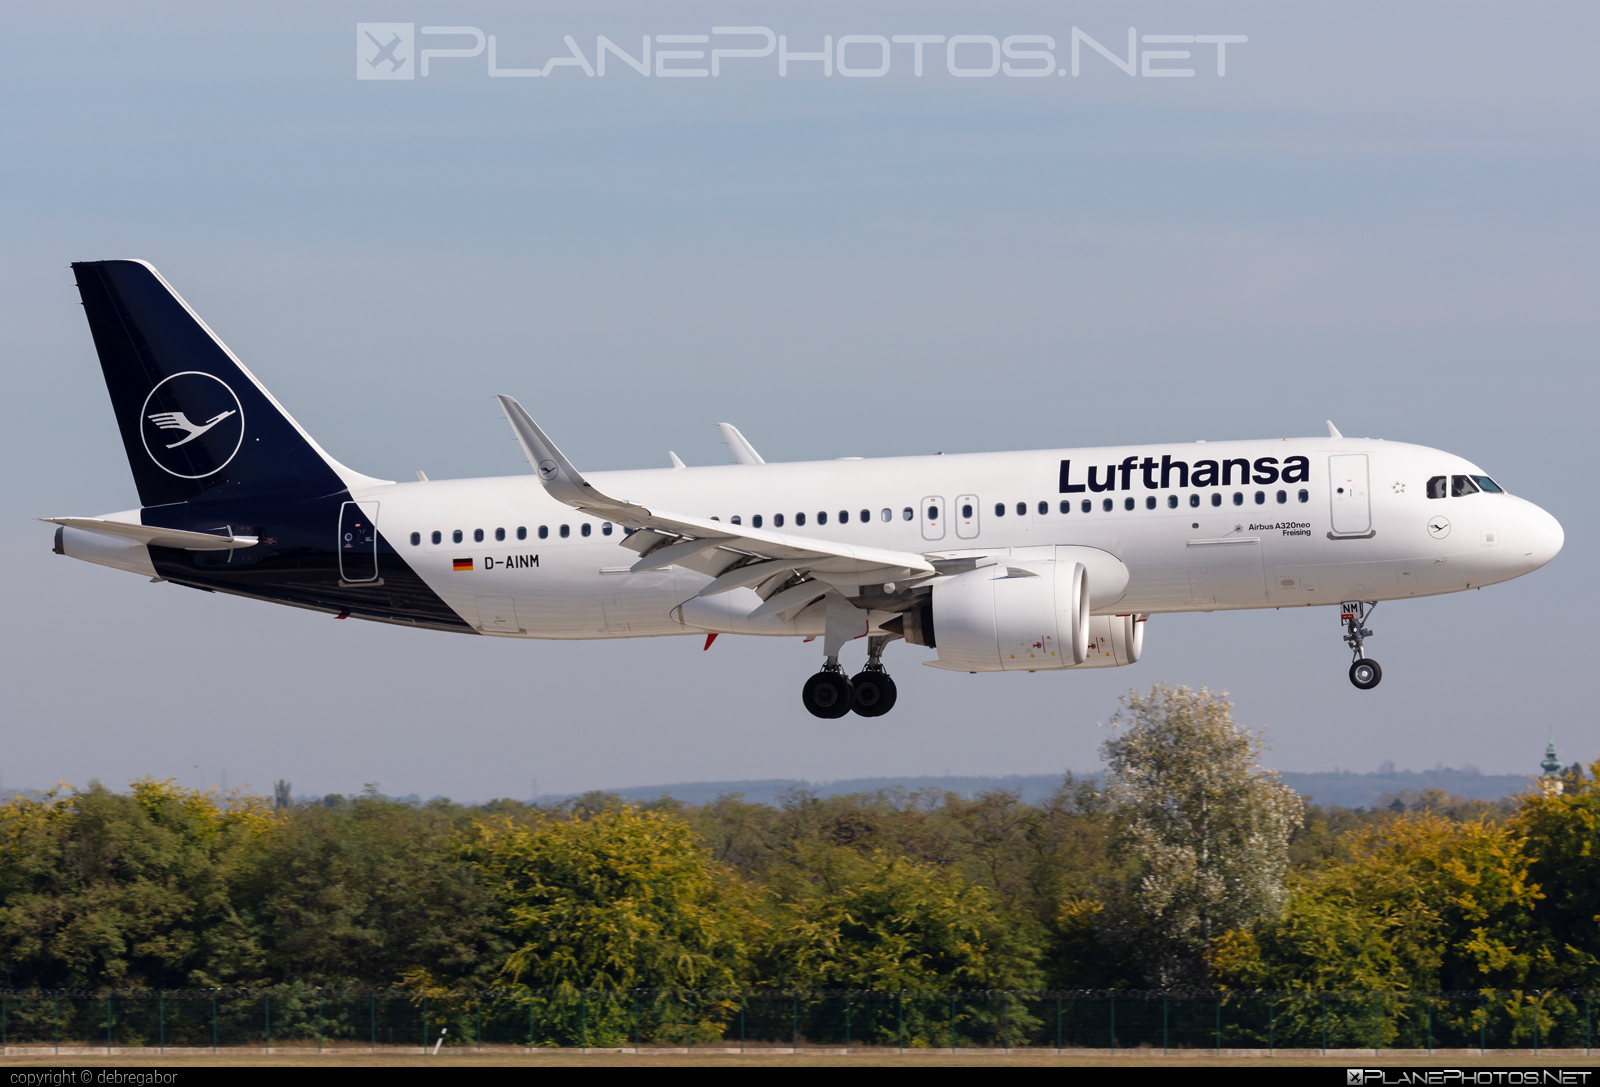 Airbus A320-271N - D-AINM operated by Lufthansa #a320 #a320family #a320neo #airbus #airbus320 #lufthansa